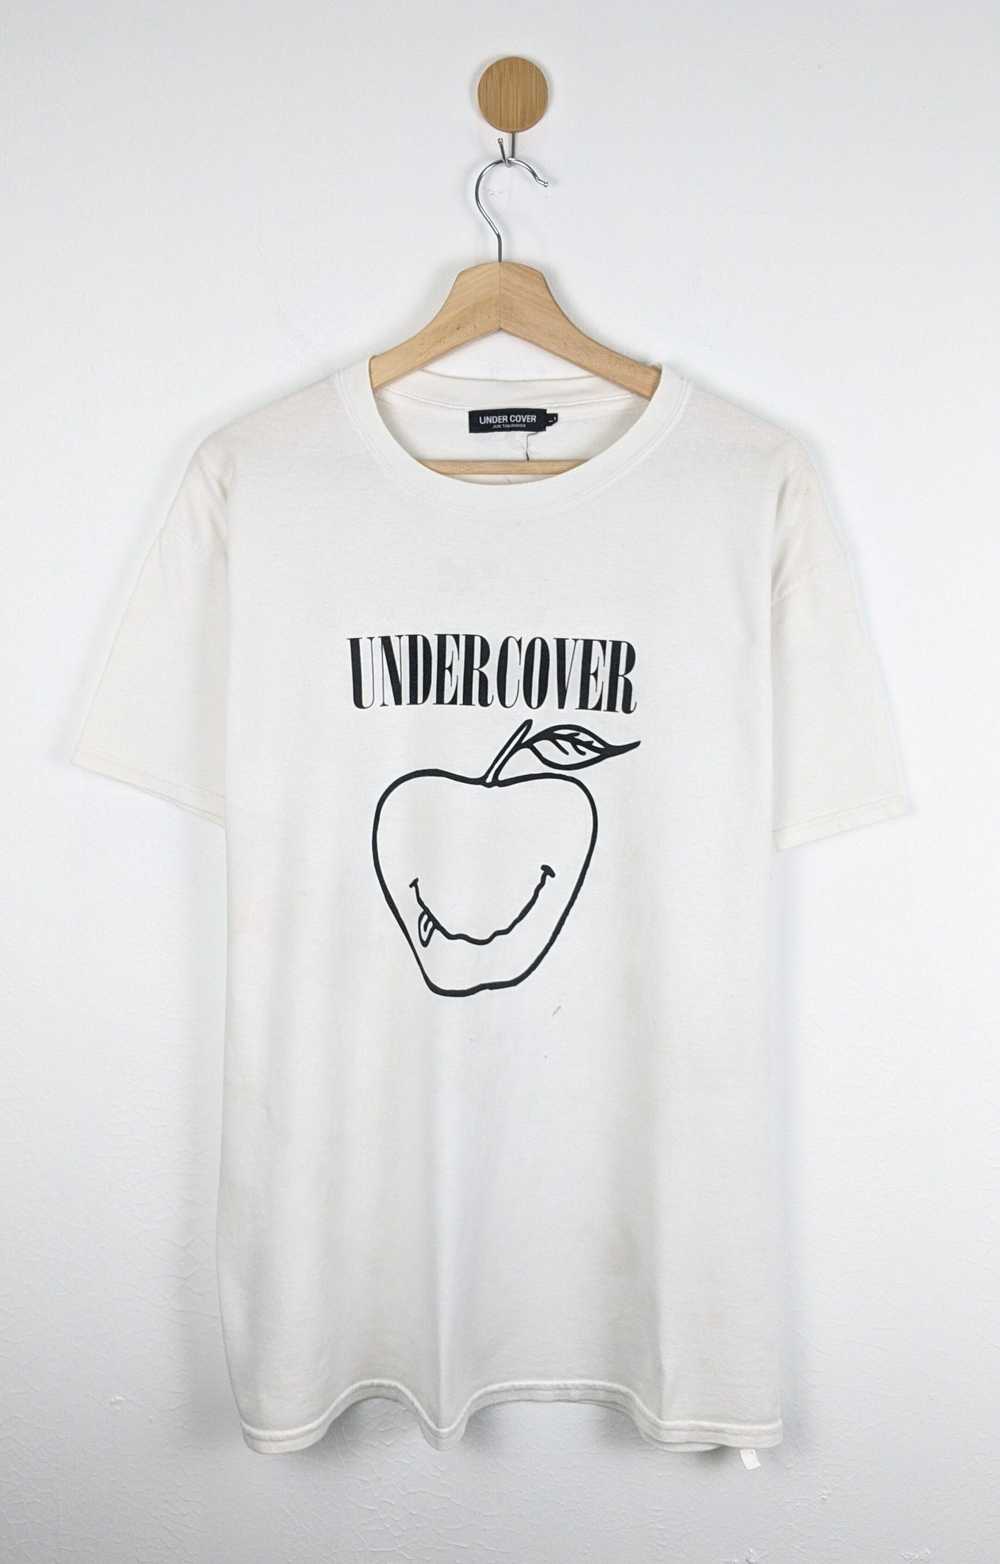 Undercover Nirvana Smiley Apple shirt - image 1